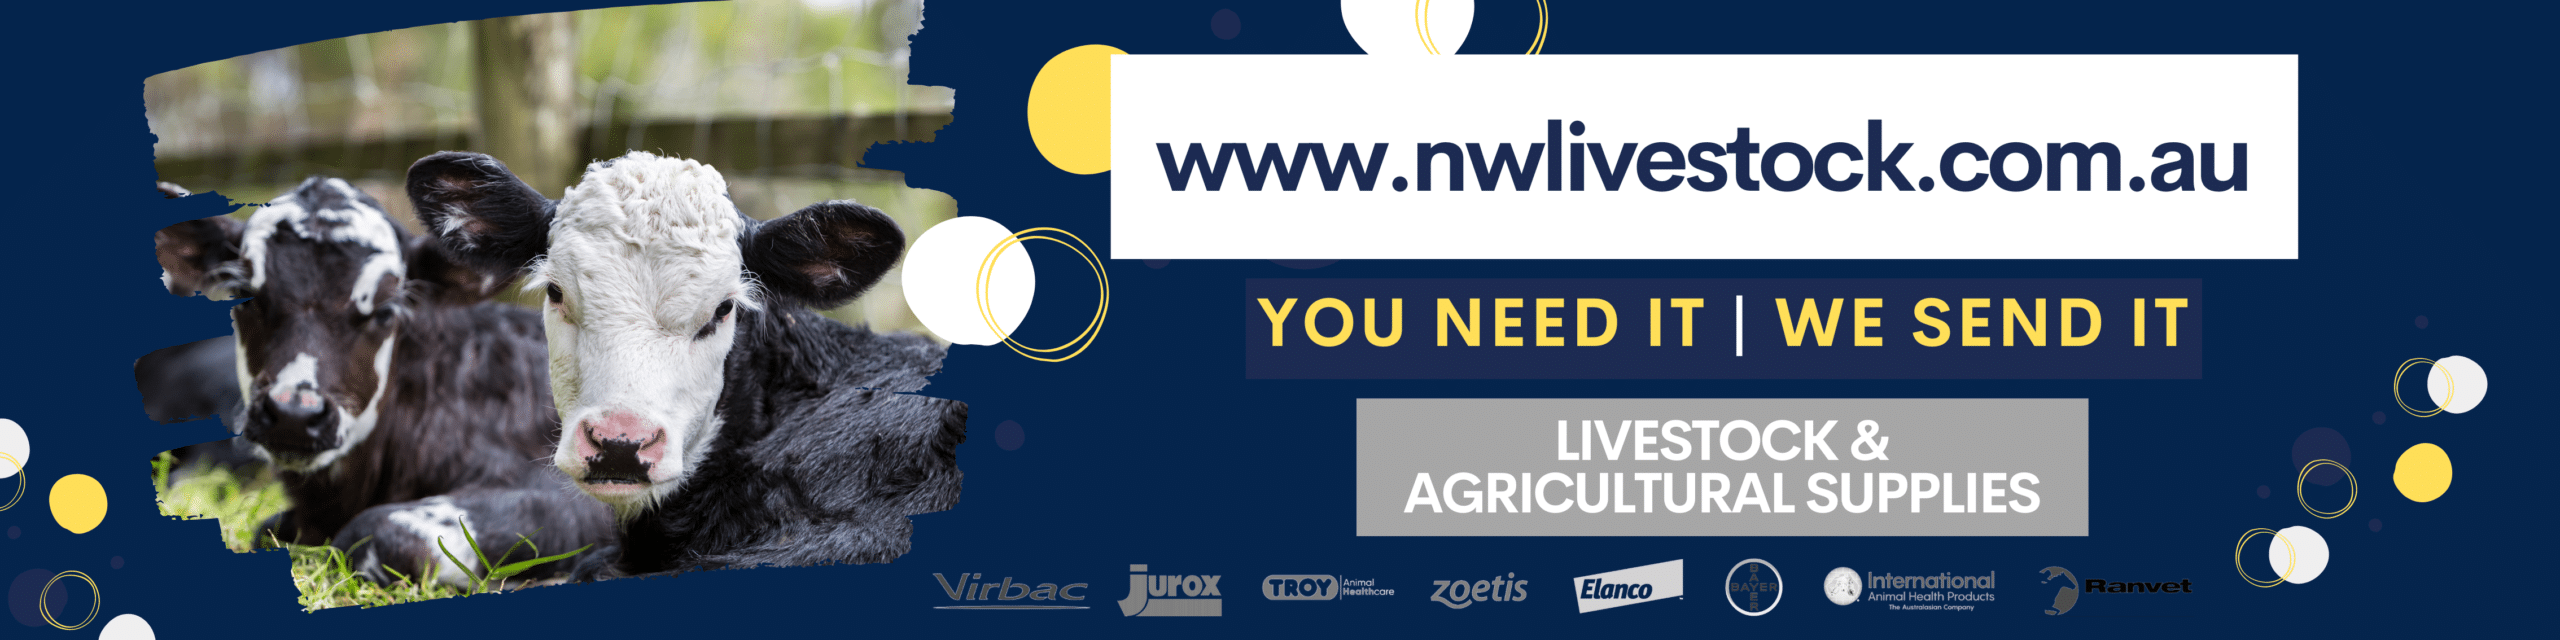 N&w livestock - livestock & agricultural supplies